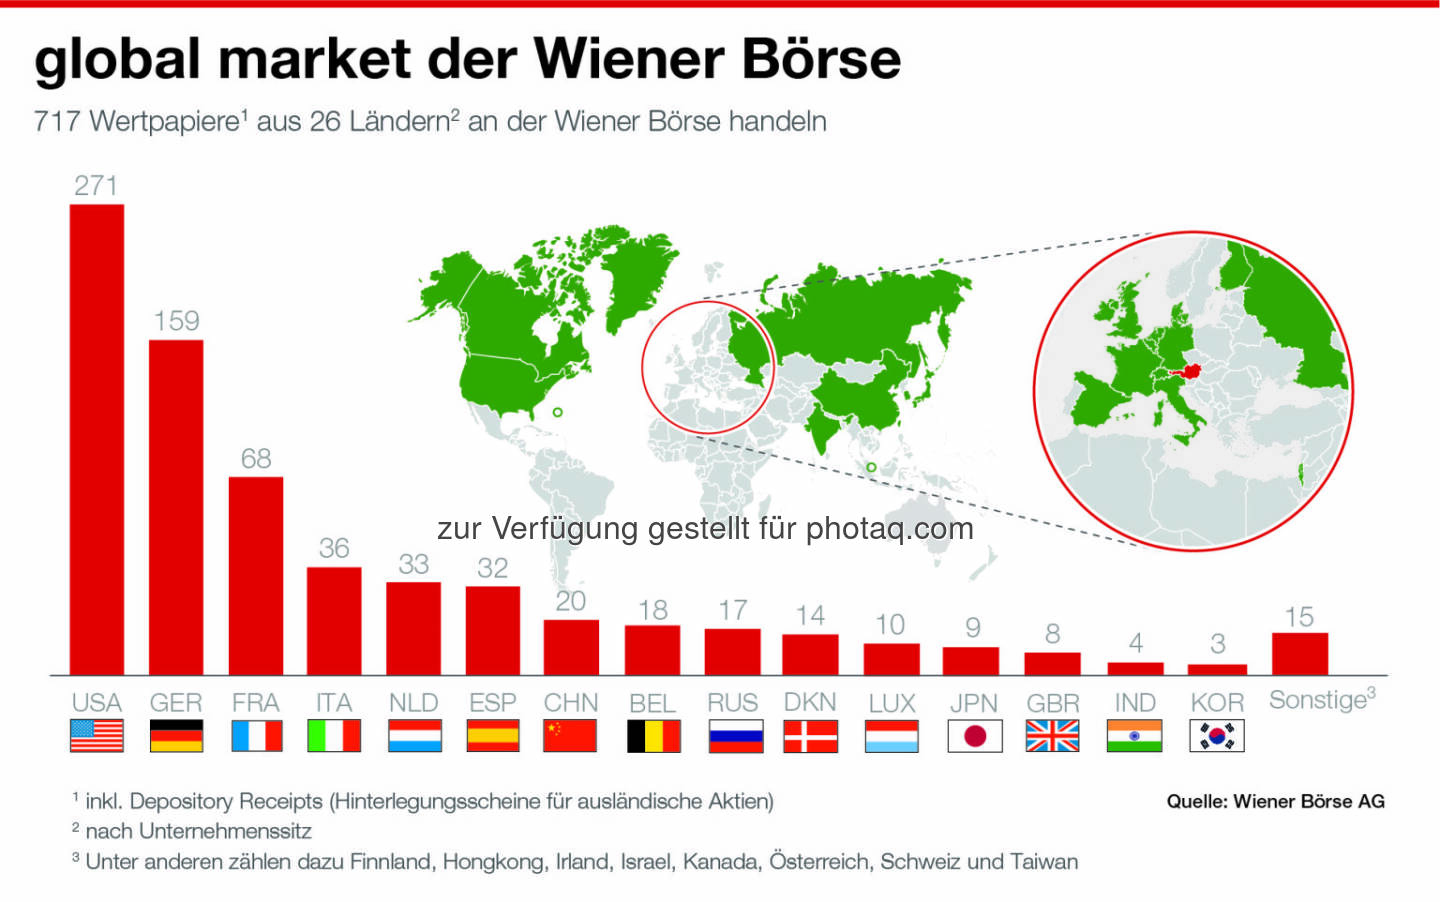 Wiener Börse - Entwicklung global market, Credit: Wiener Börse